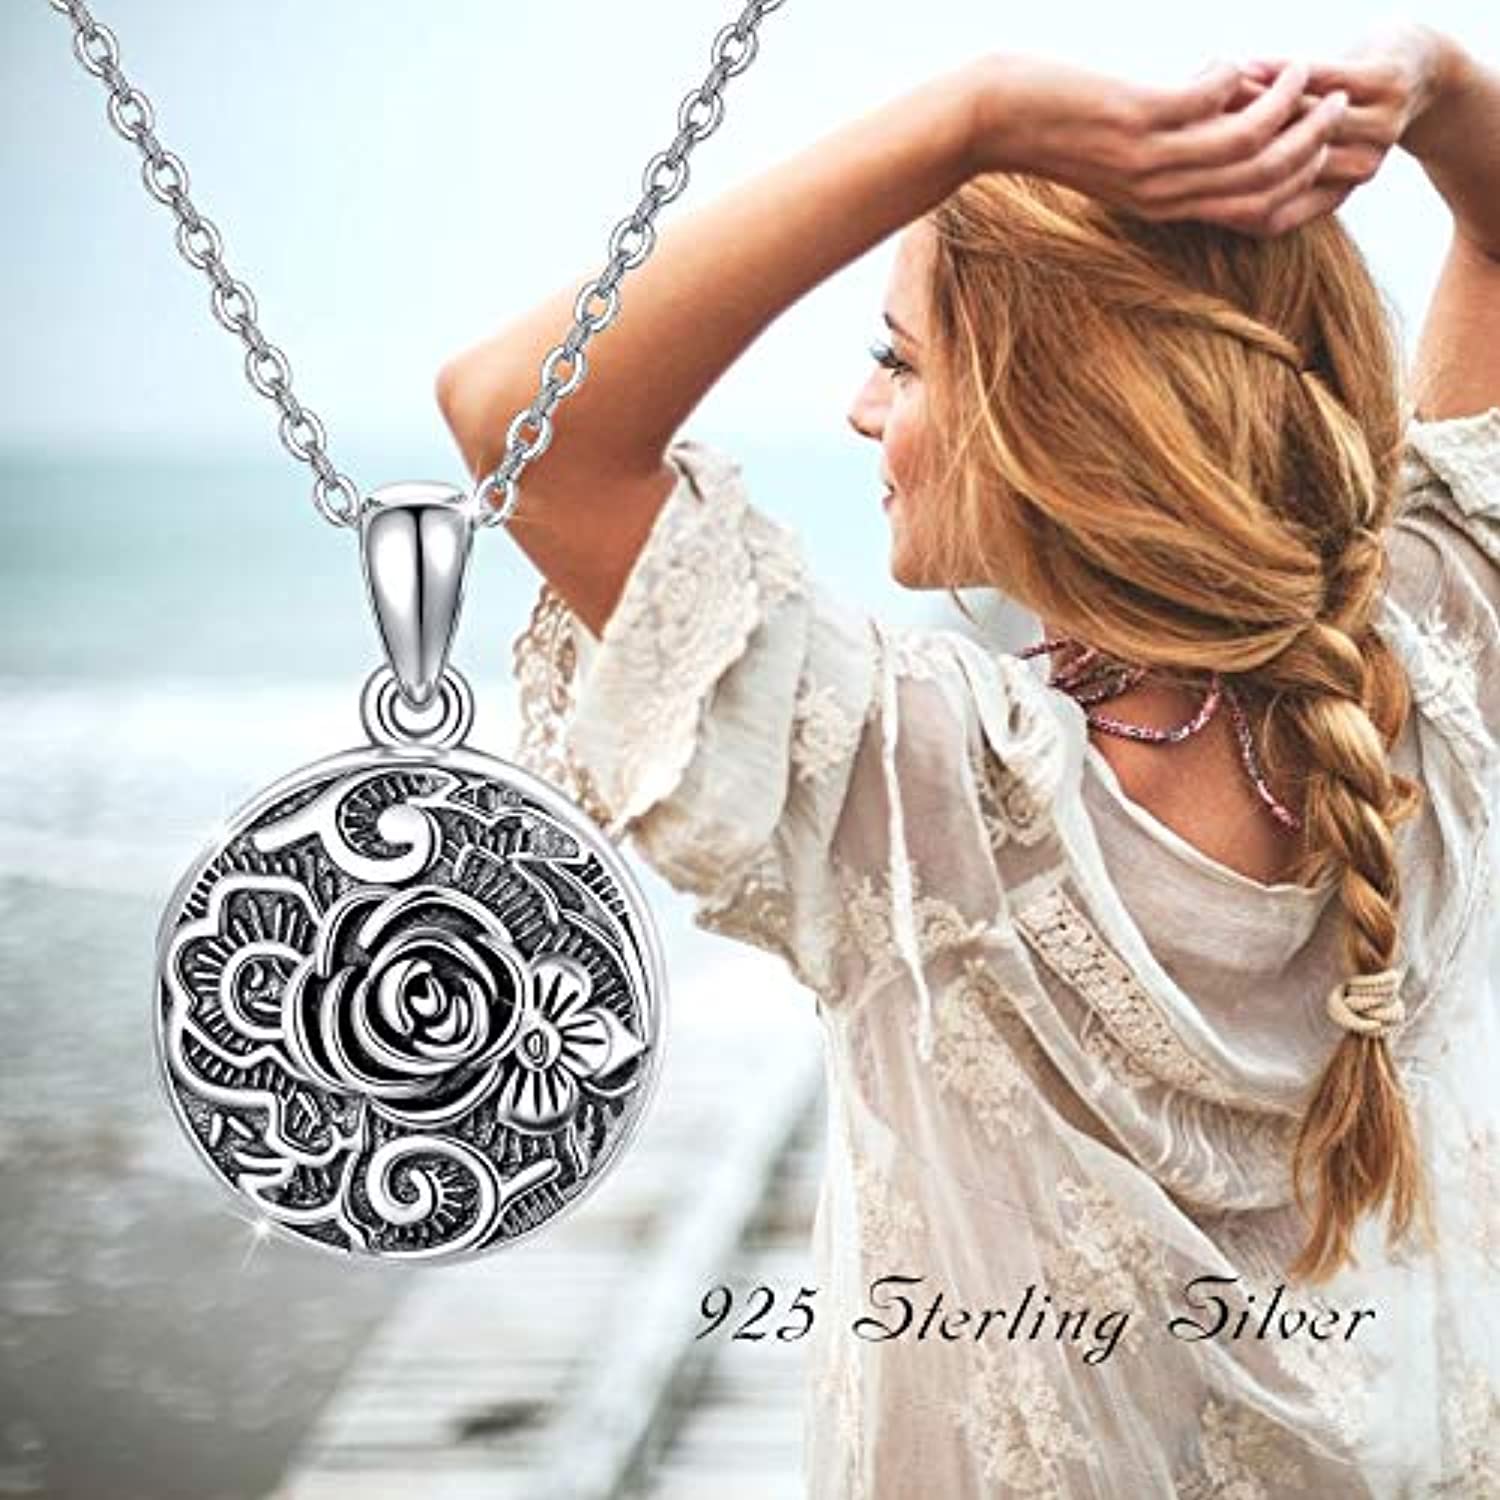 Rose Flower Locket Necklace That Holds Pictures S925 Sterling Silver V